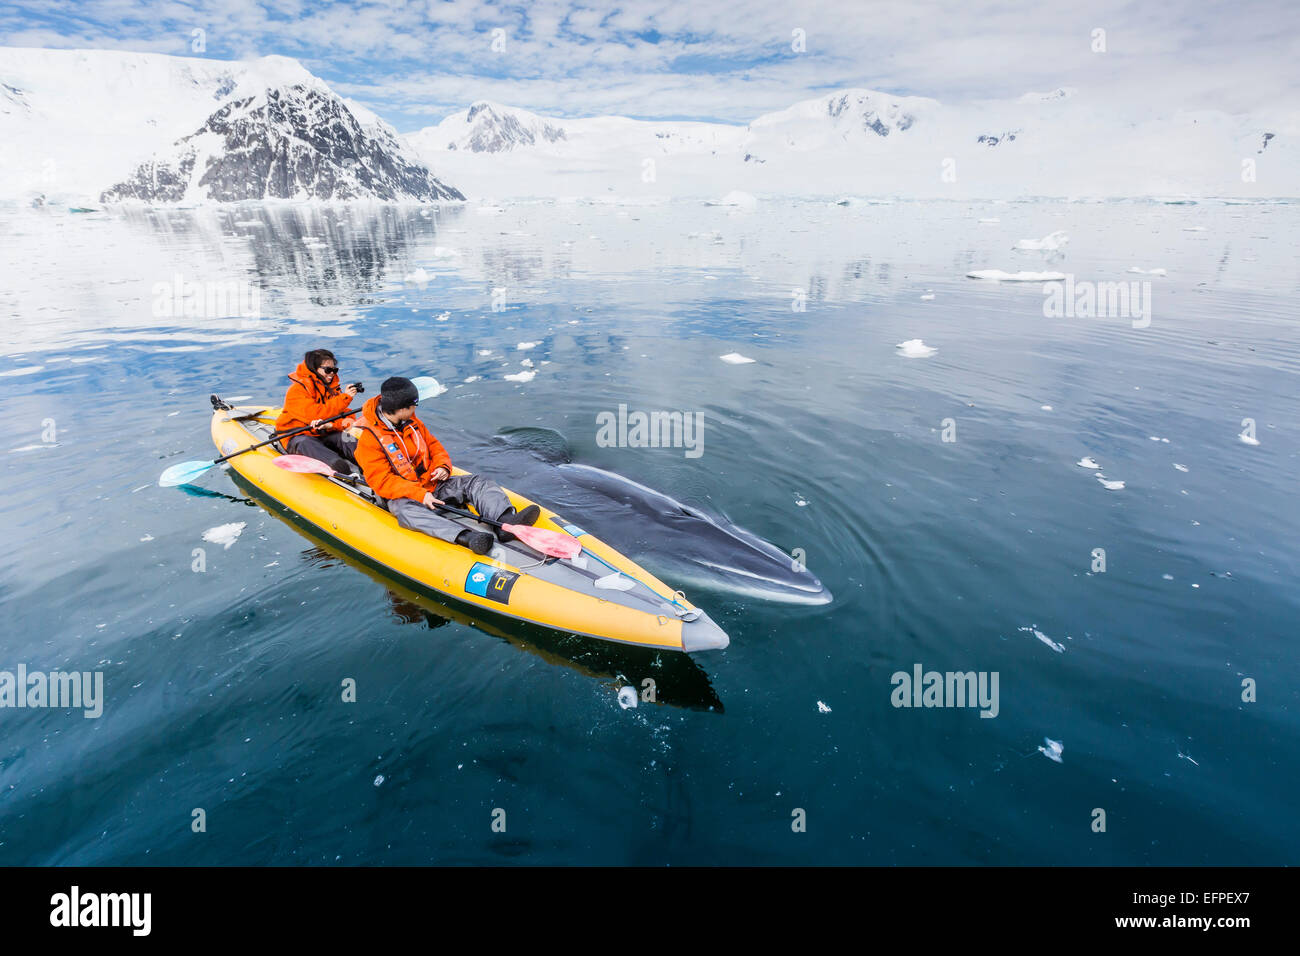 Un curioso Antartico minke whale approcci kayakers, in Neko Harbour, l'Antartide, regioni polari Foto Stock